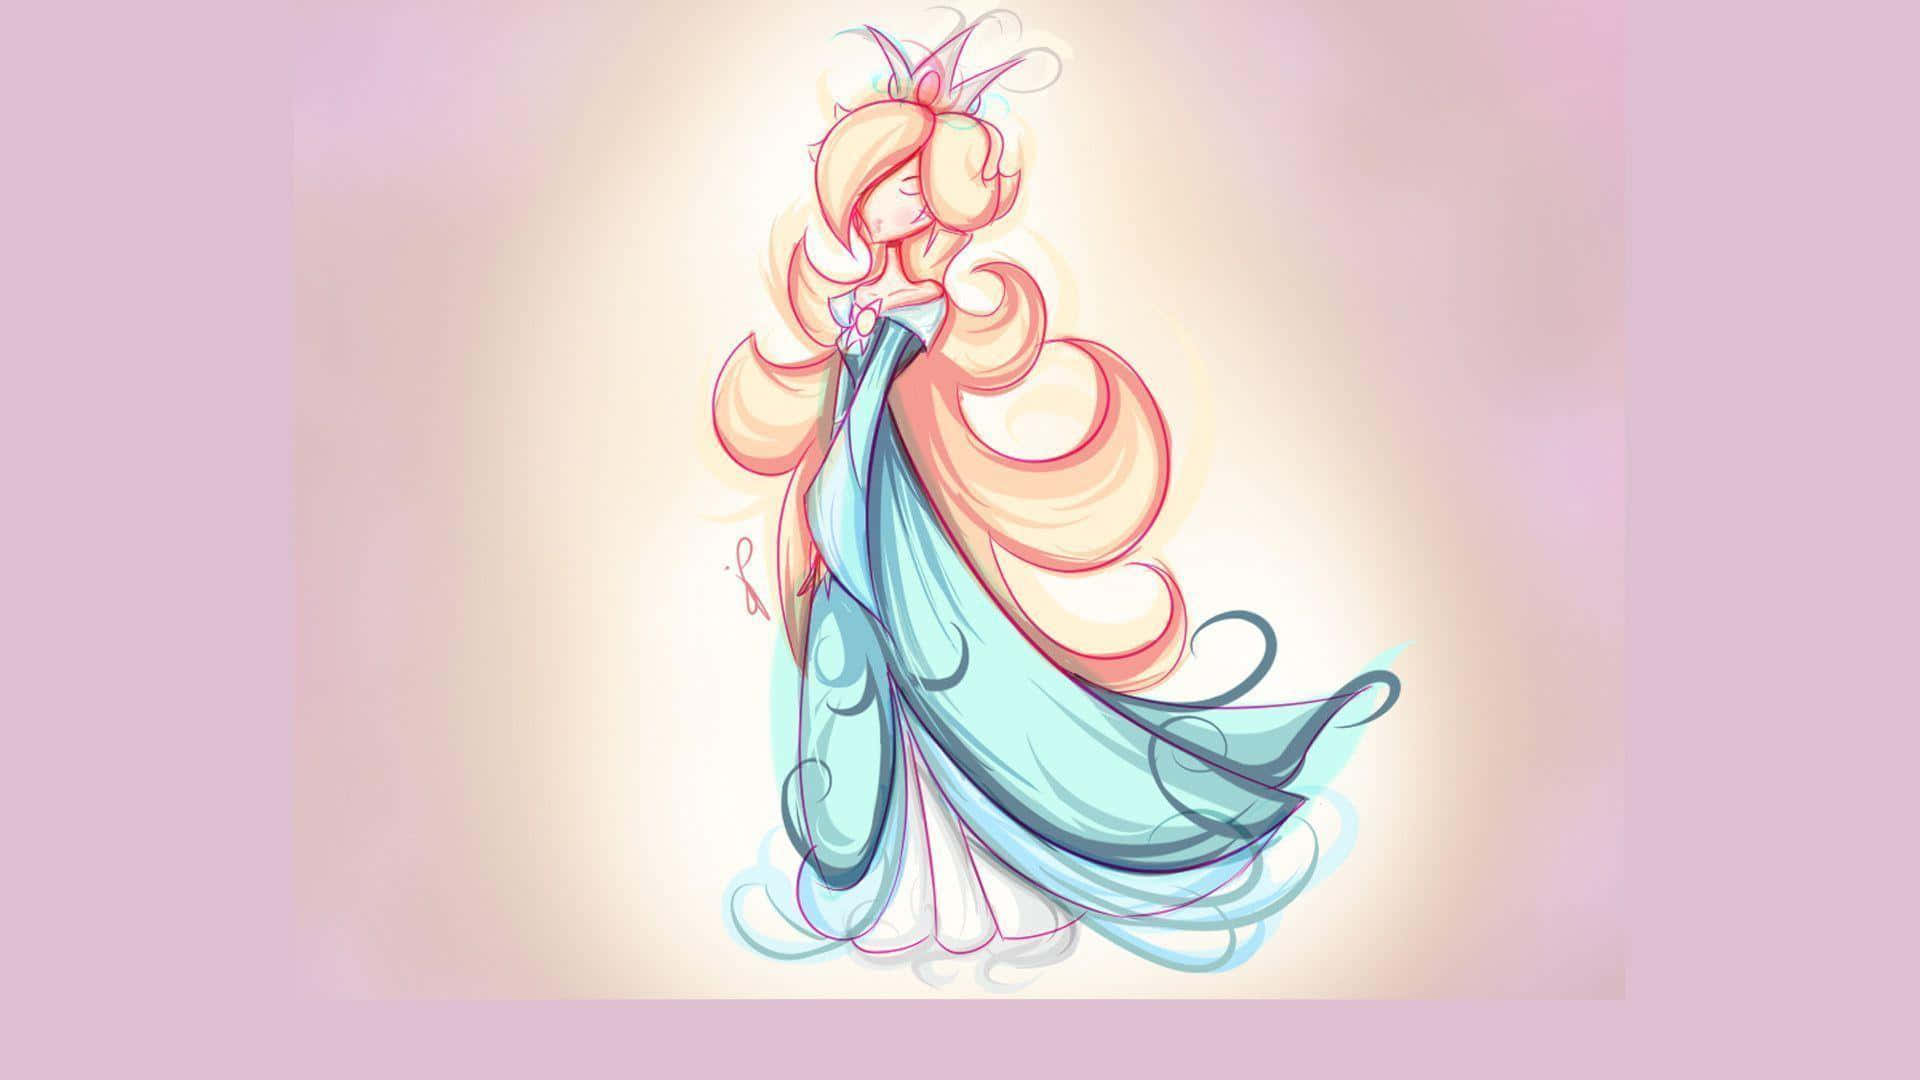 Princess Rosalina poised in a celestial aura Wallpaper